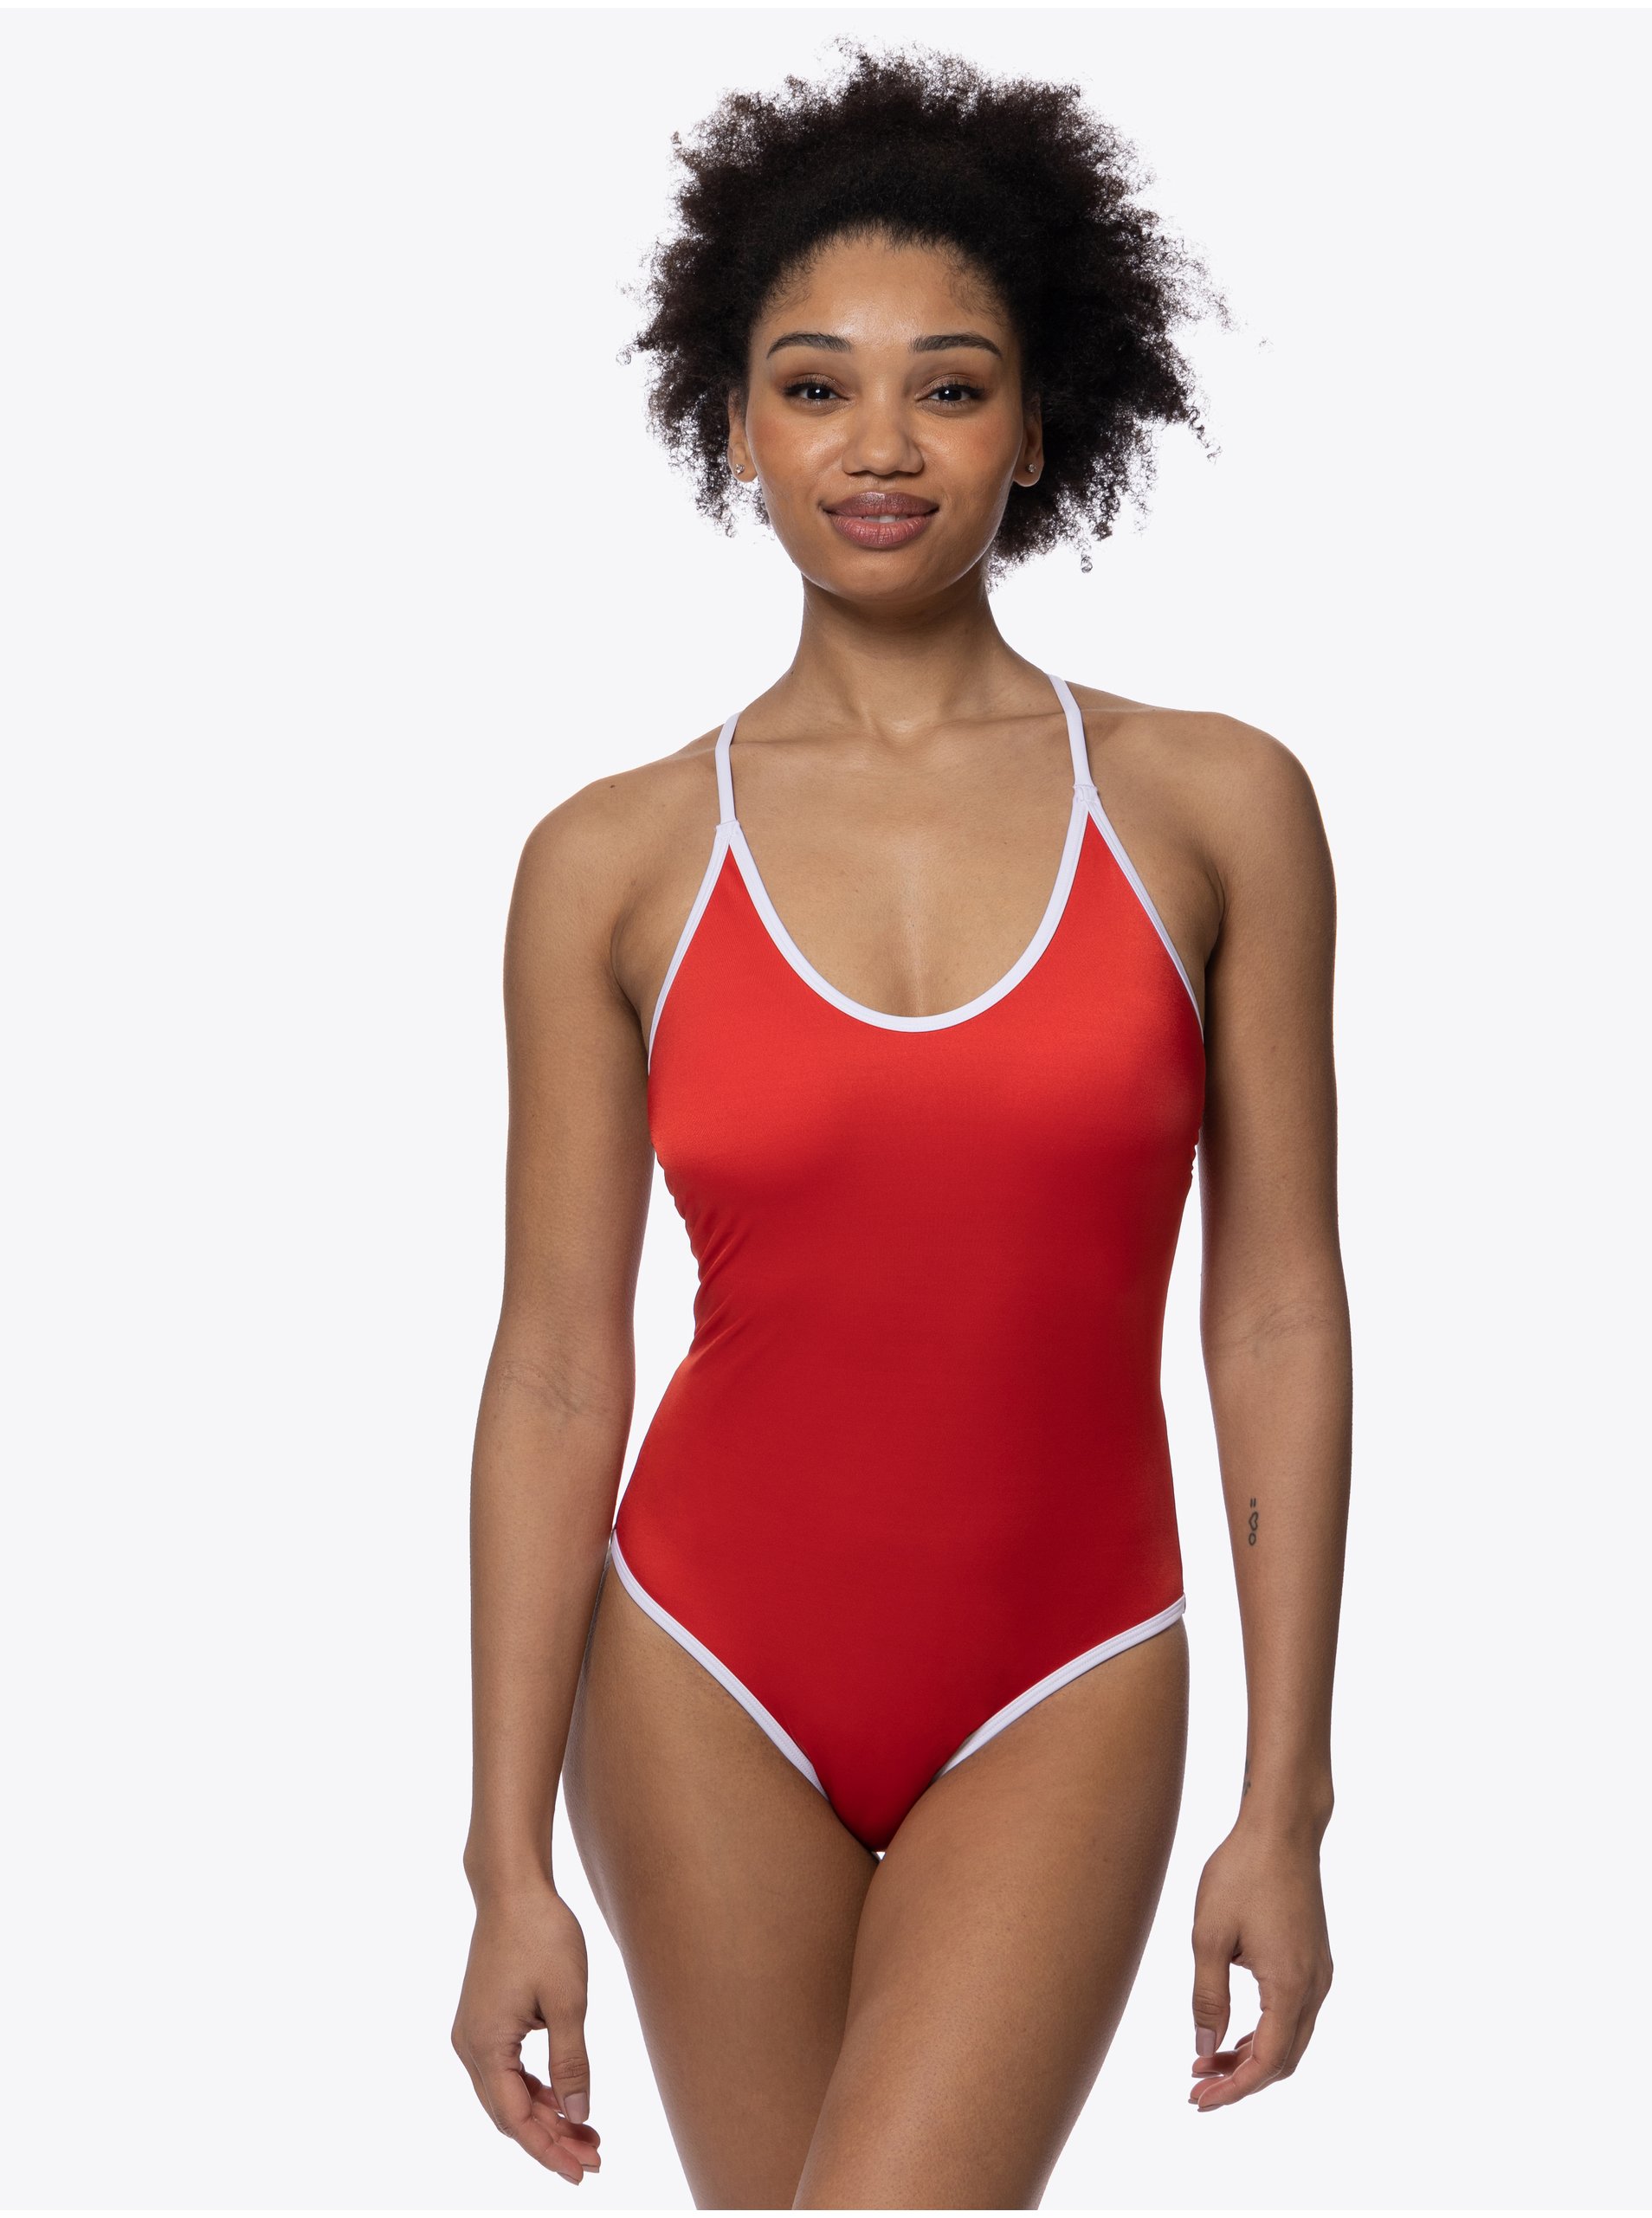 Red Women's One-Piece Swimwear DORINA Bandol - Women